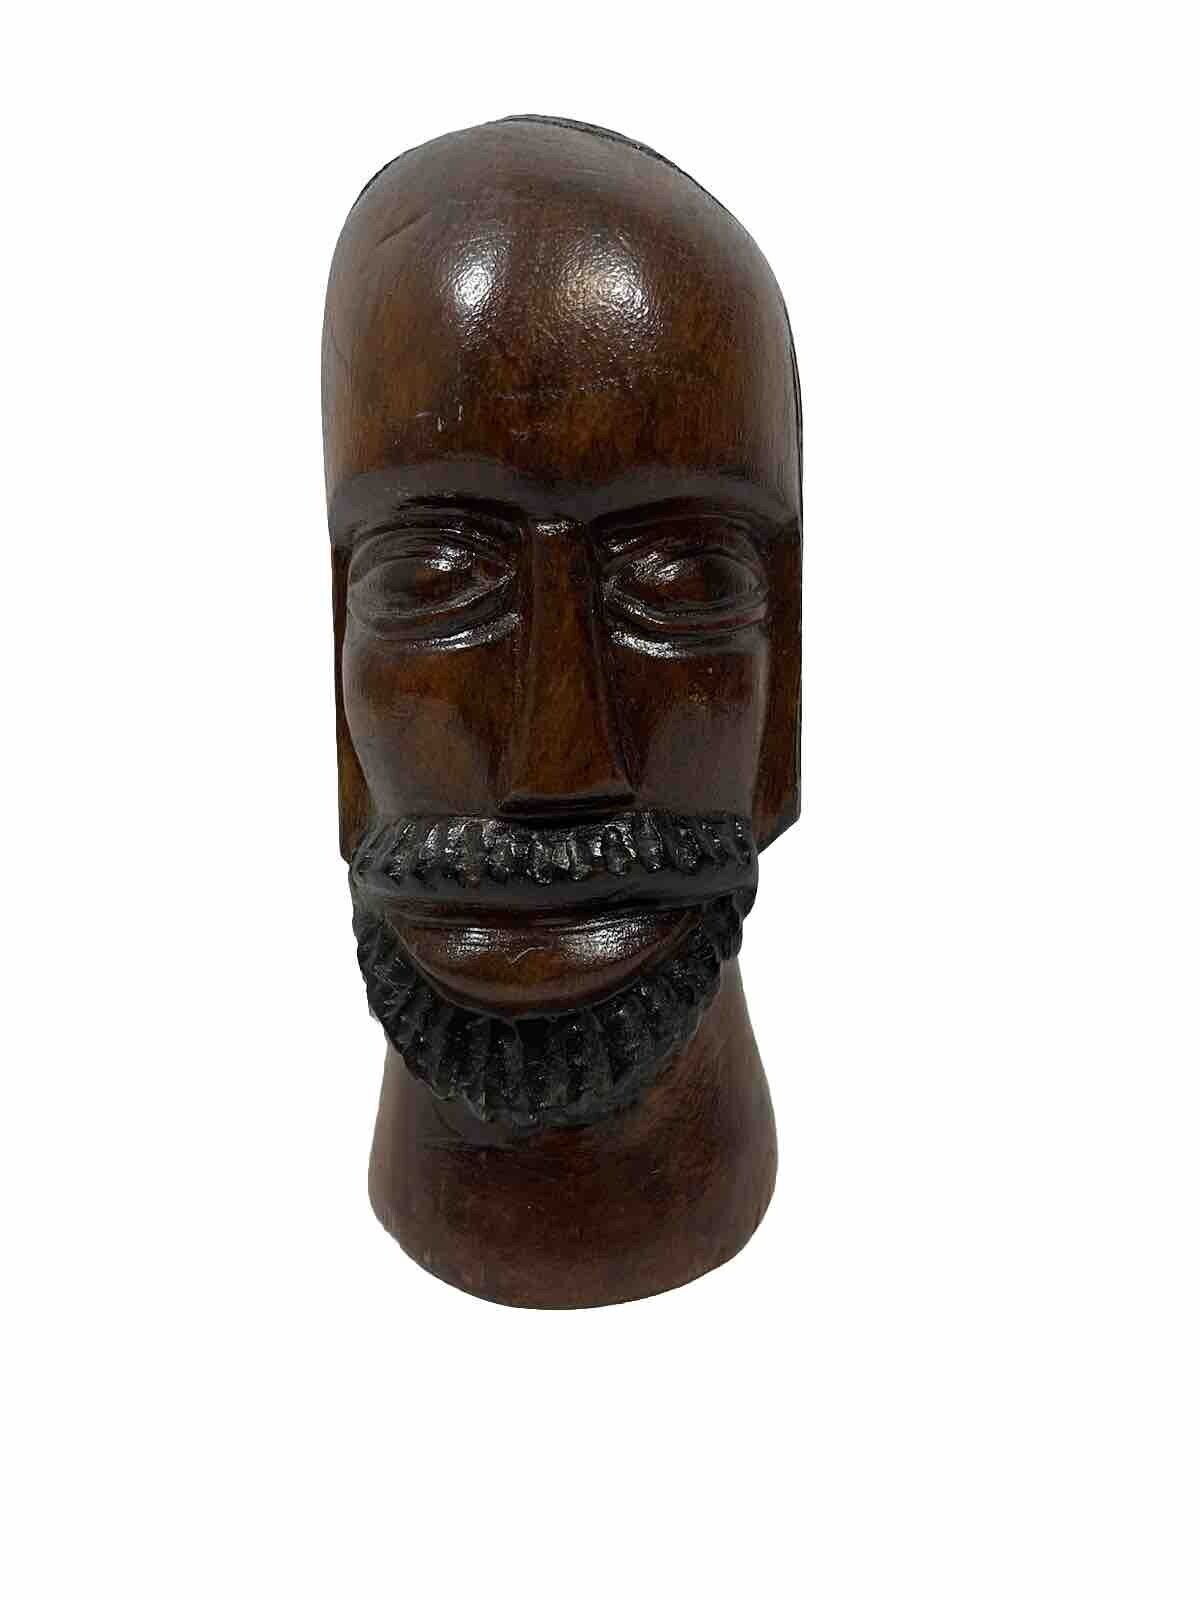 African Inspired Wooden SCULPTURE Man Figurine Hand Carved Brown Beard